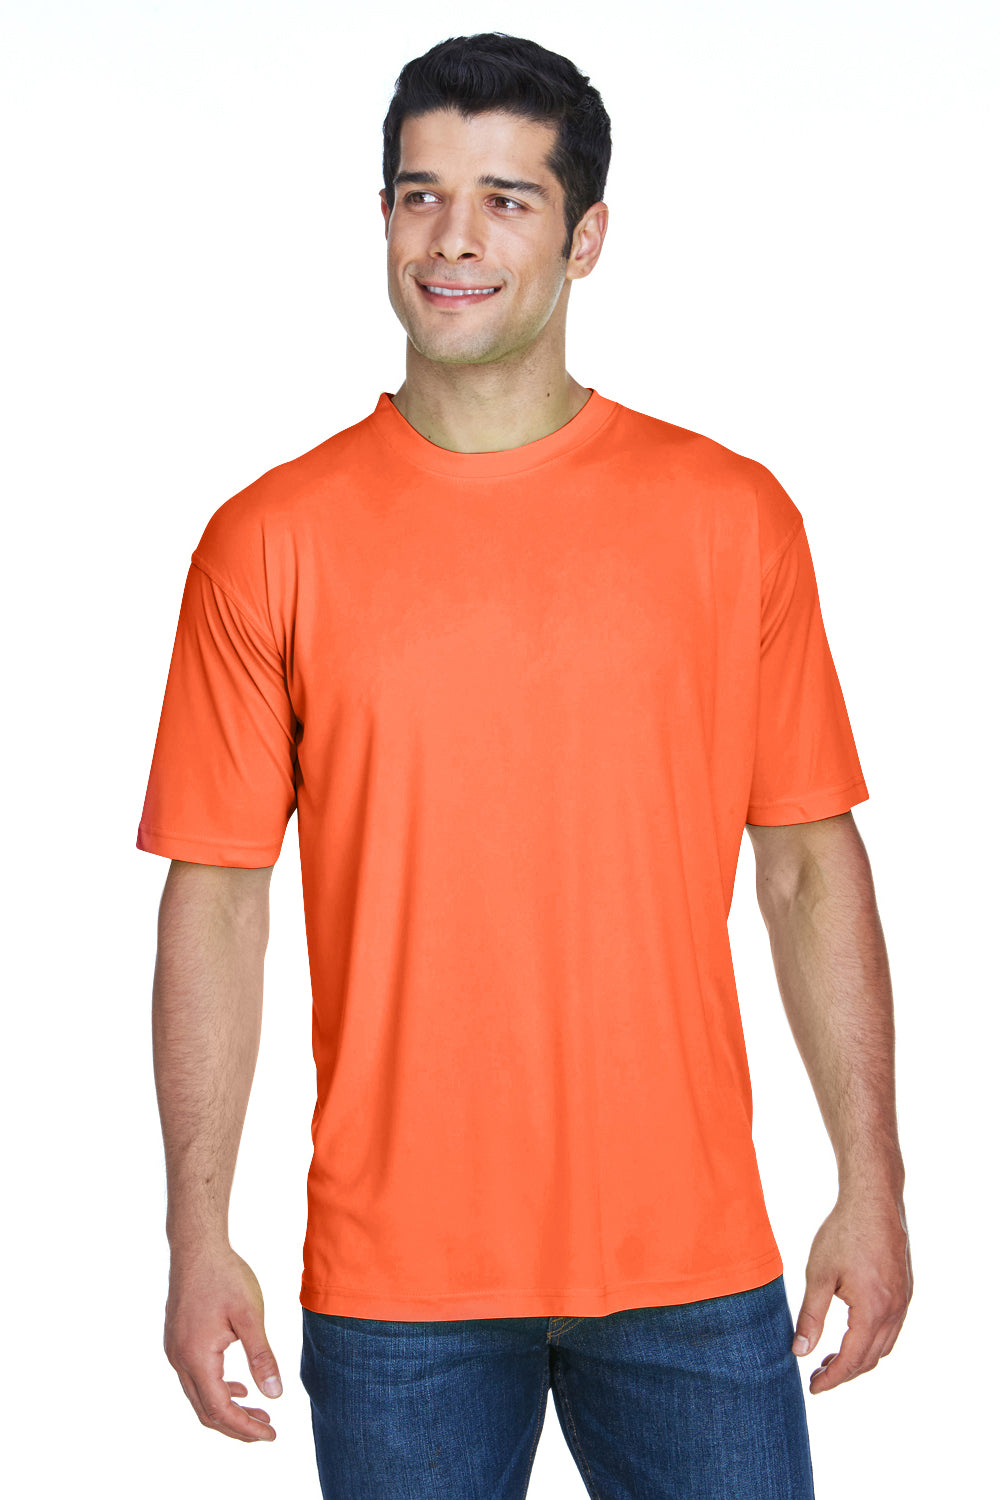 UltraClub 8420 Mens Cool & Dry Performance Moisture Wicking Short Sleeve Crewneck T-Shirt Bright Orange Front